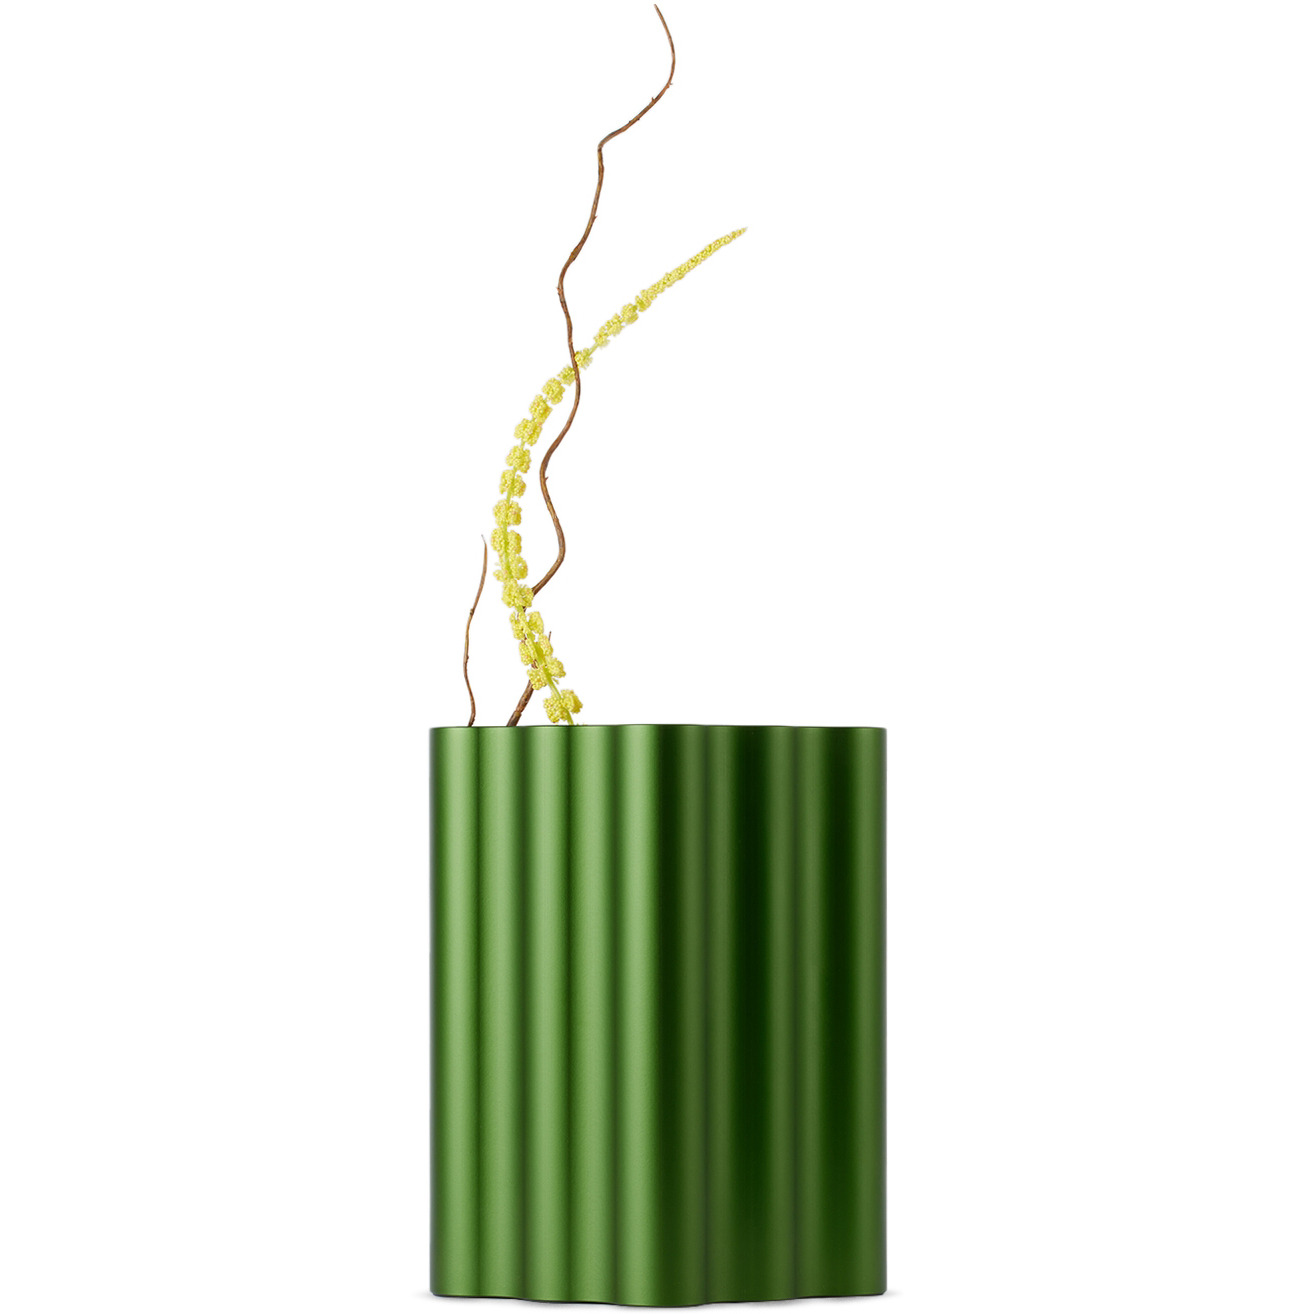 Vitra Green Medium Nuage Vase - image 1